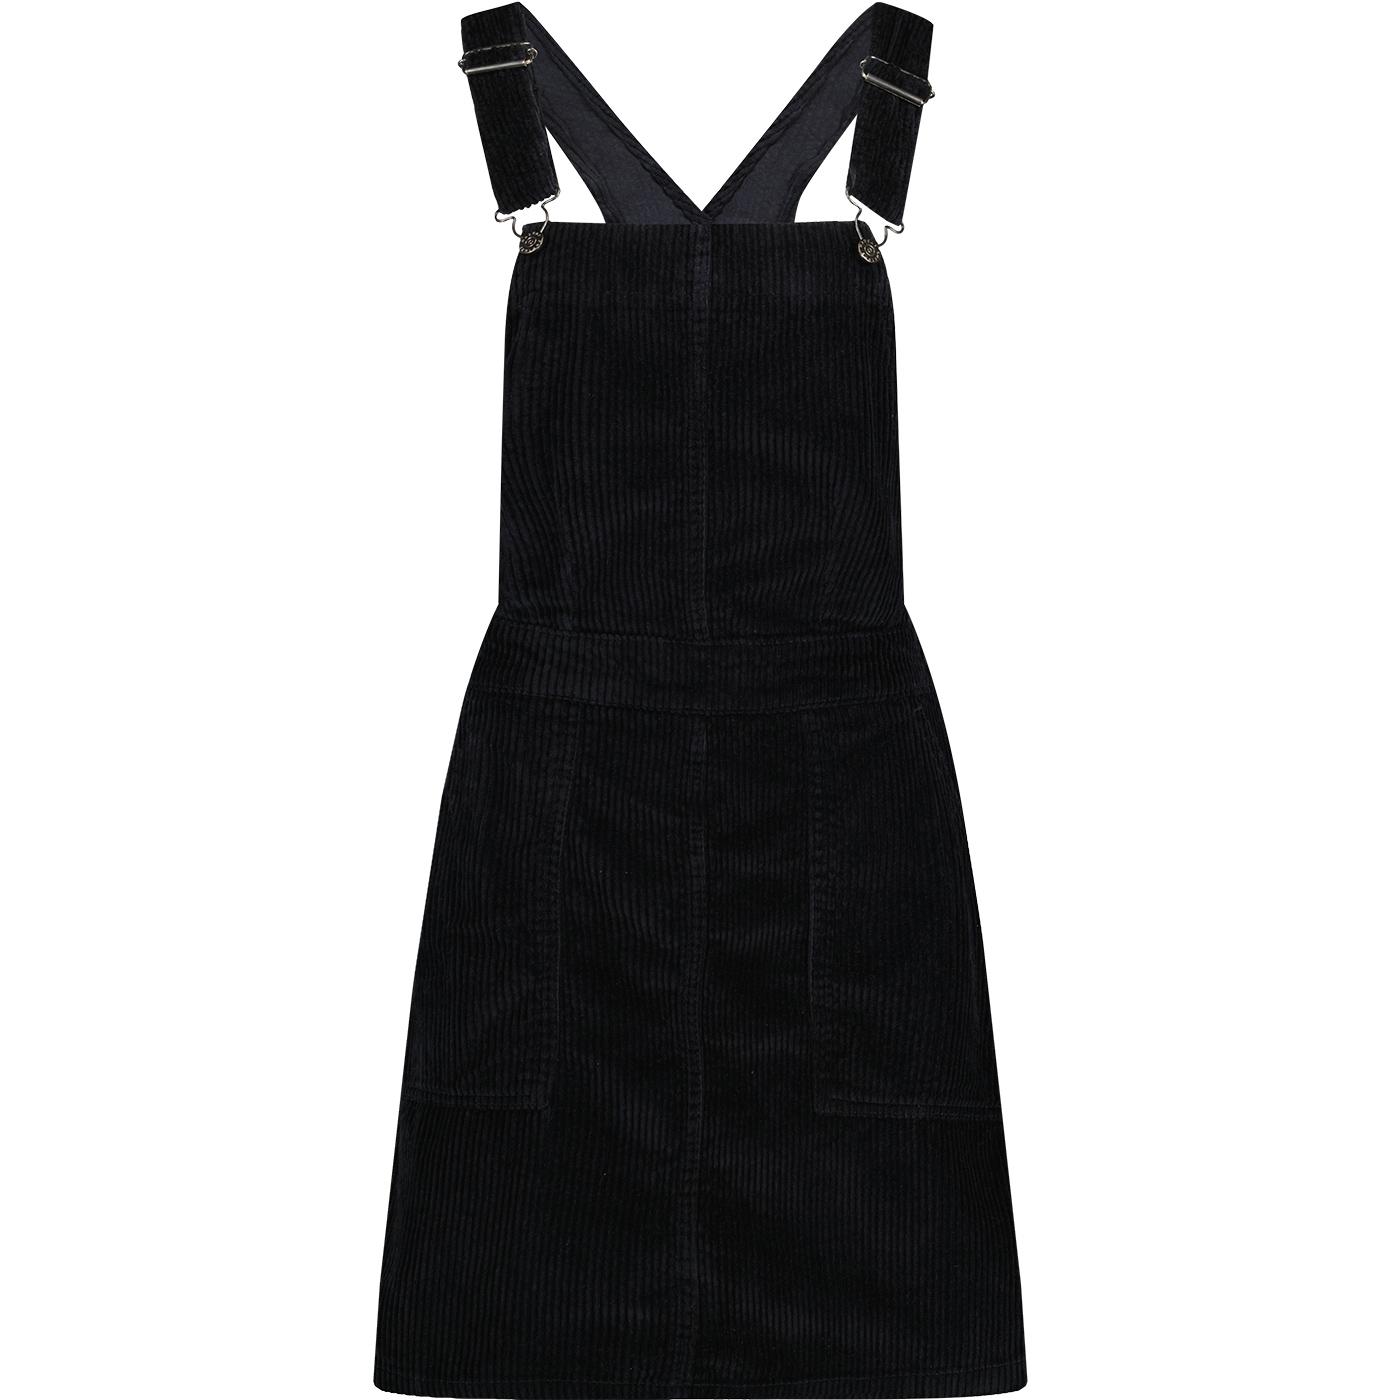 Marlo MADCAP ENGLAND 1960s Cord Pinafore Dress (B)